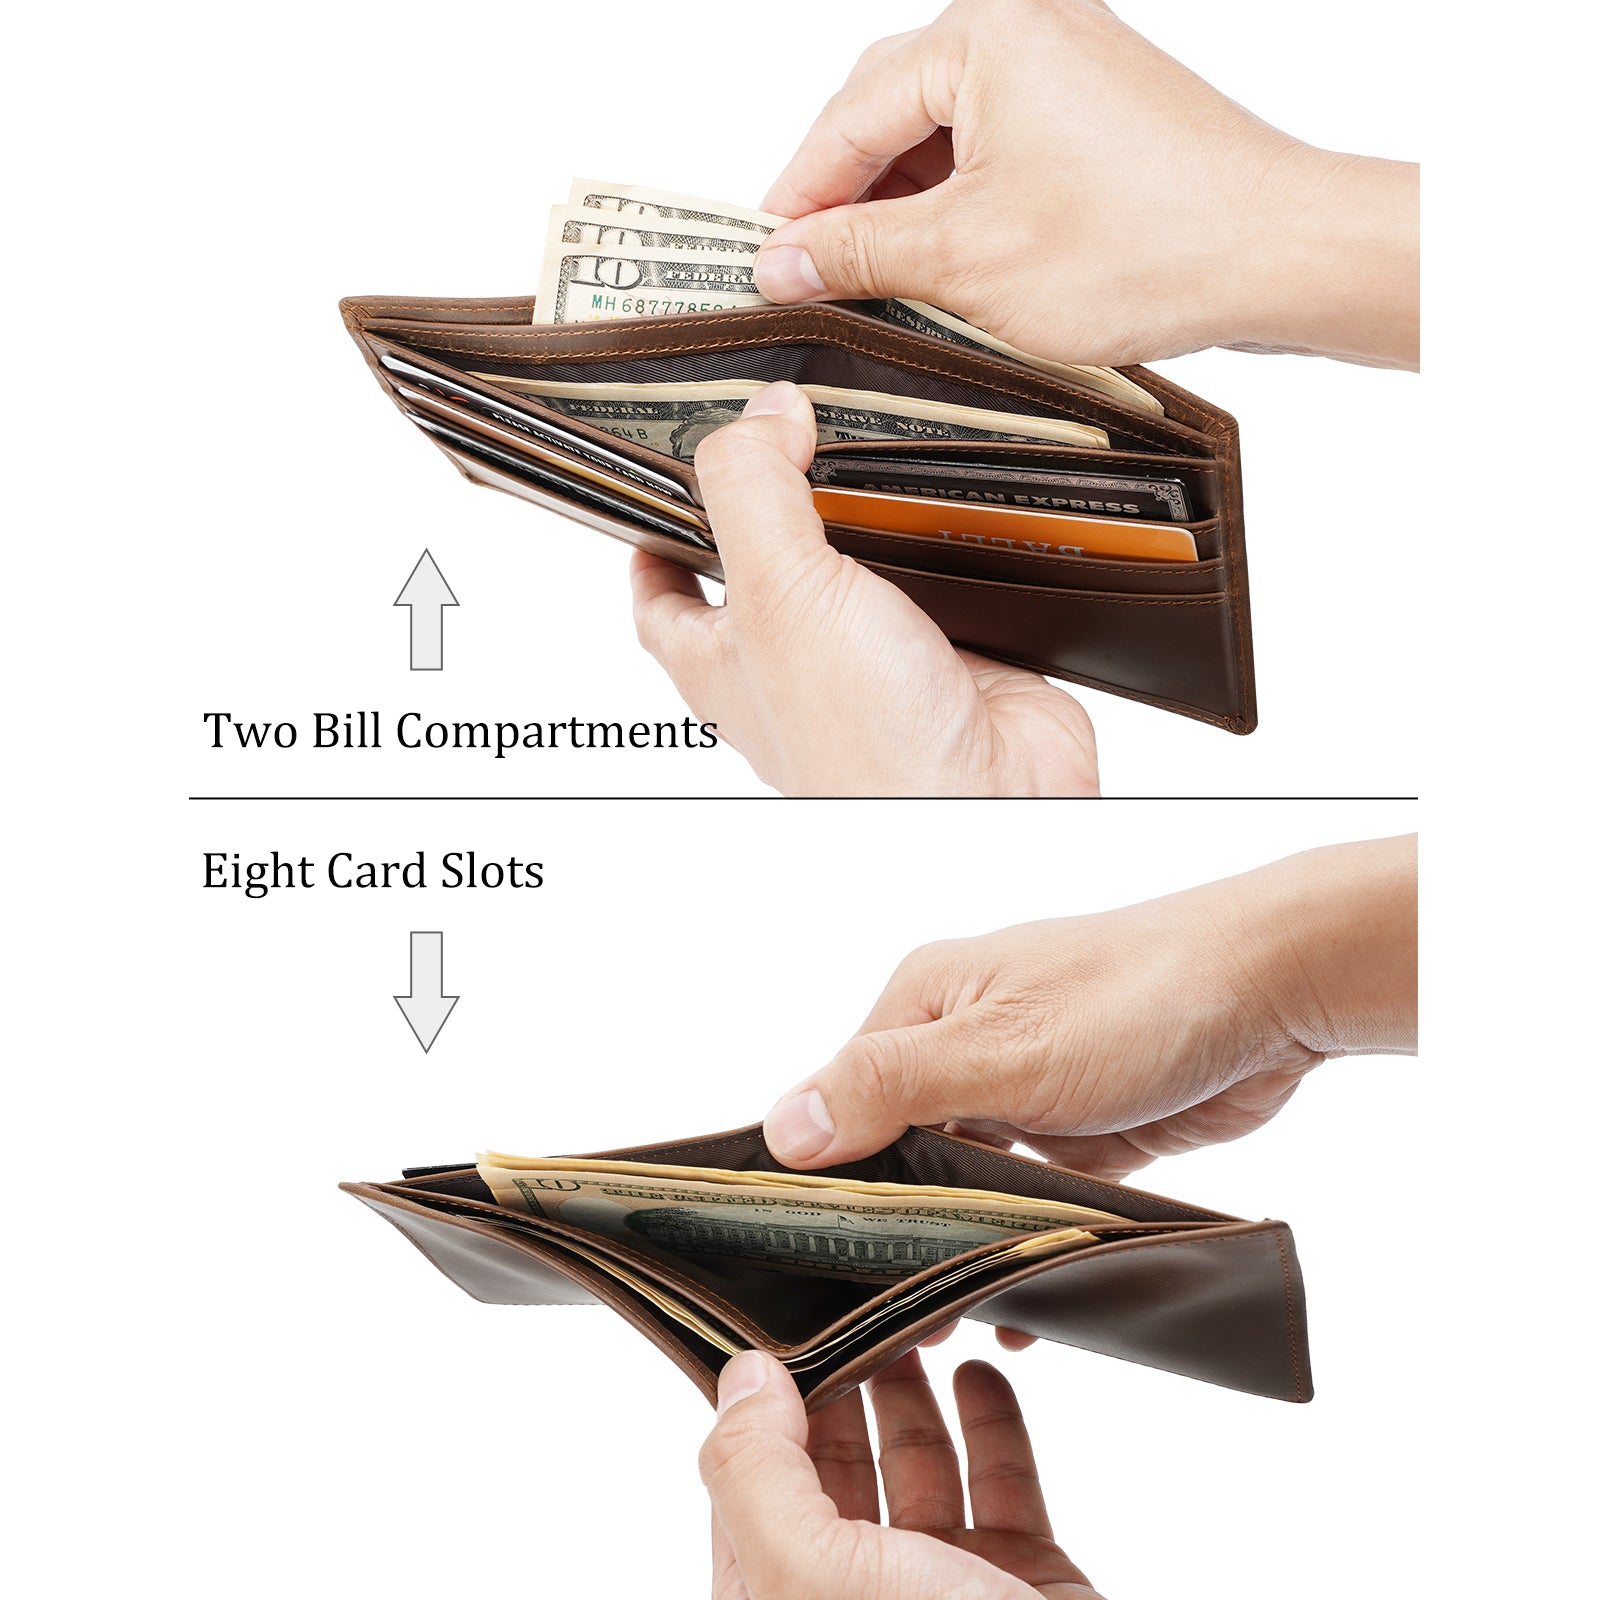 fcity.in - Fancy Unique Men Wallet Artificial Leather Wallet Wallet For Men  Men